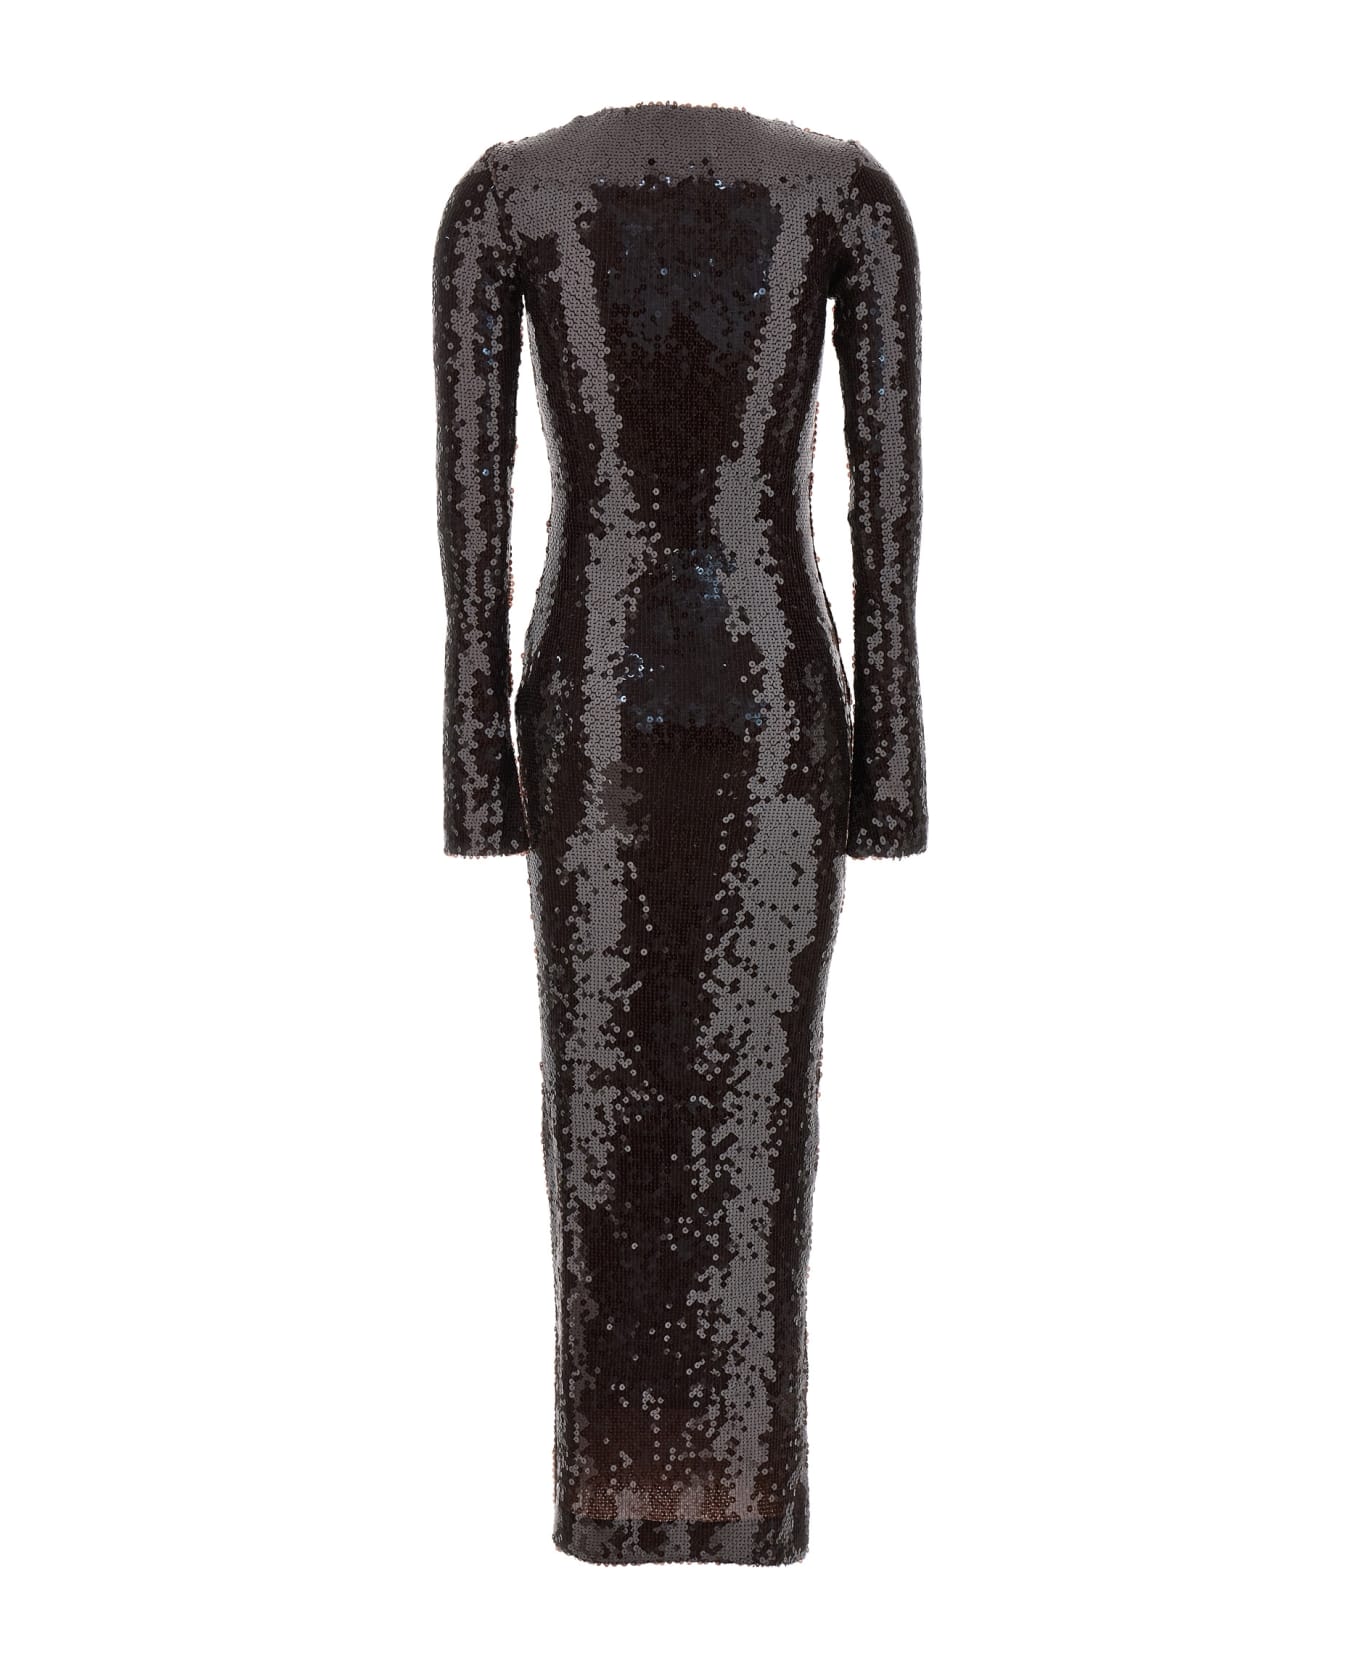 16arlington 'solaria' Long Dress - Brown